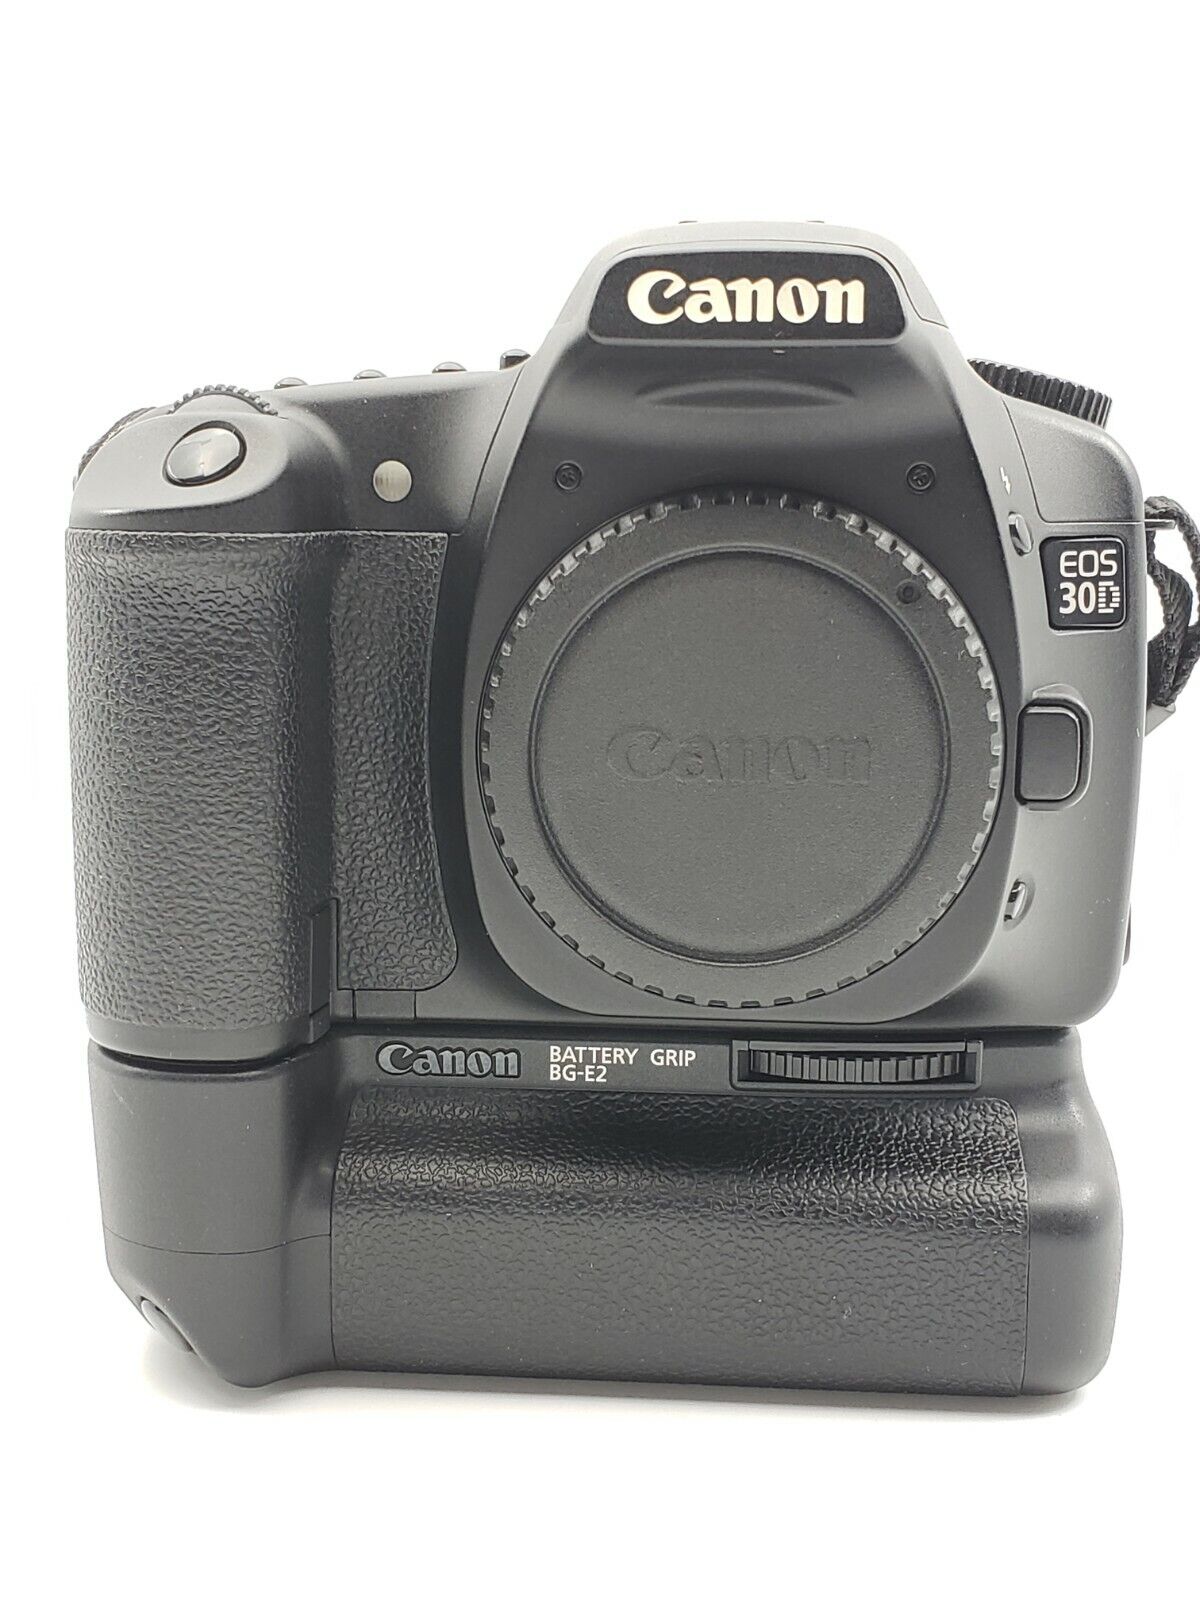 Canon EOS 30D 8.2MP Digital SLR Camera with Canon BP-E2 Battery Grip